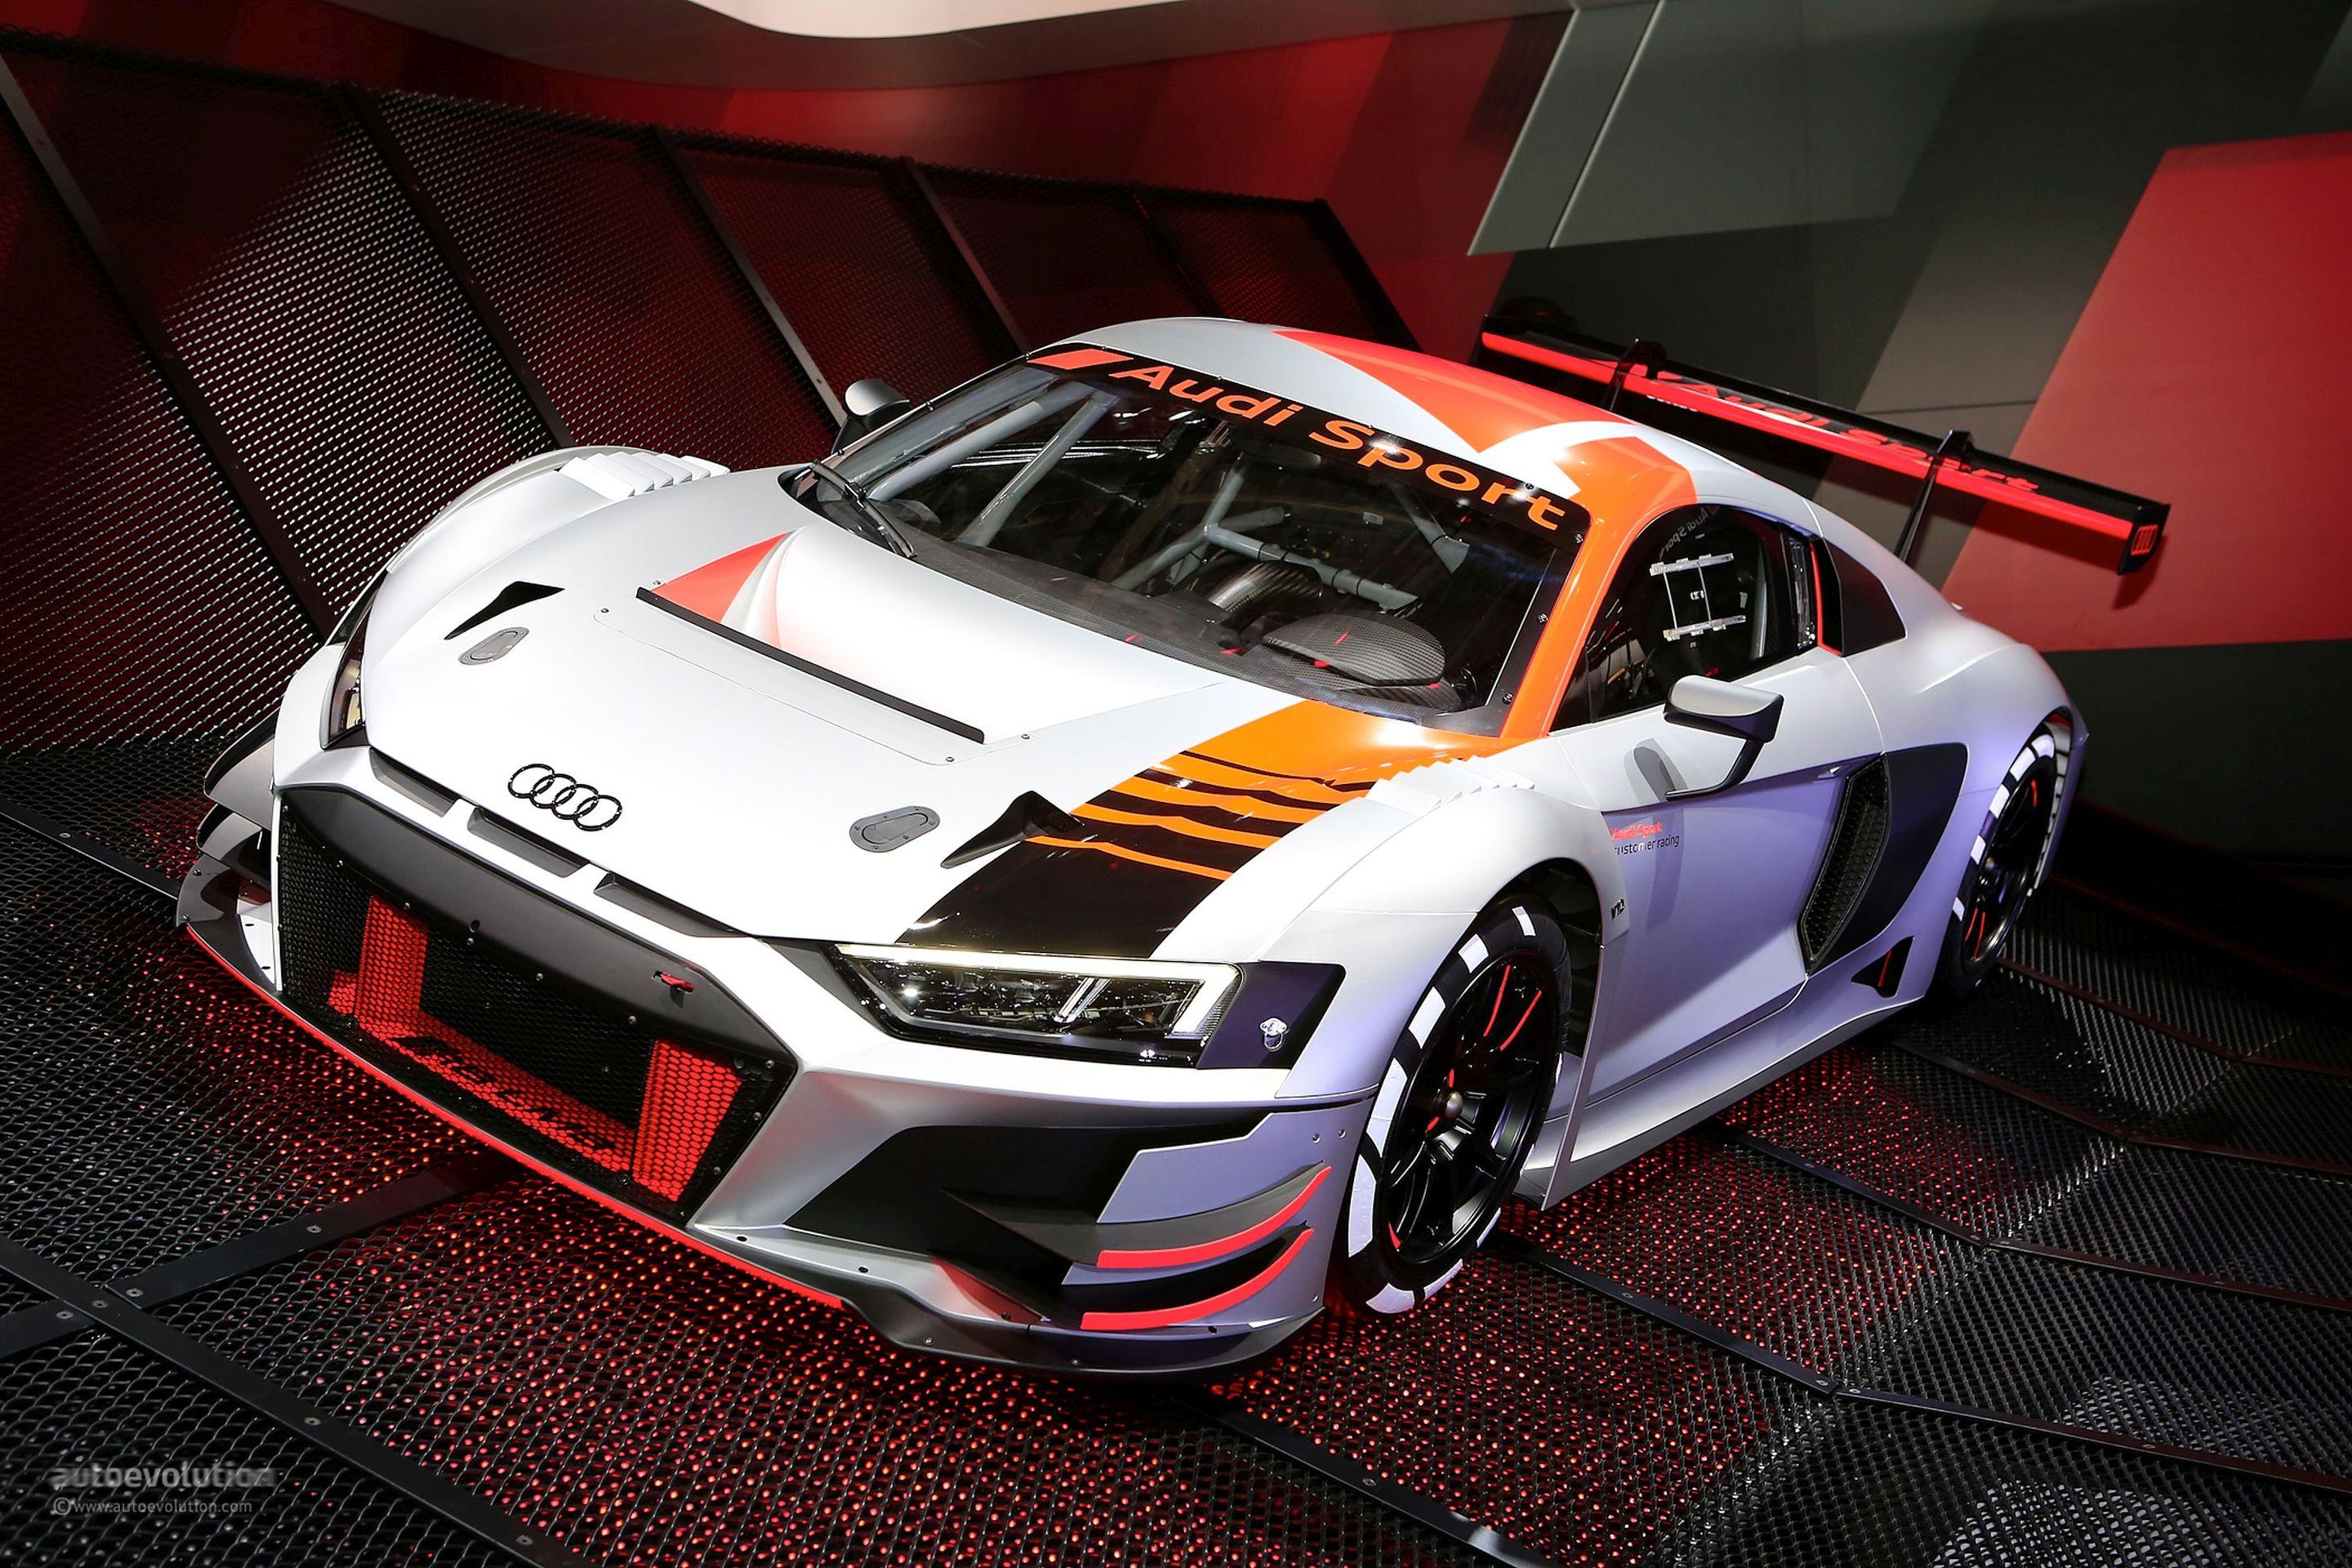 Audi R8 LMS Logo - Audi R8 LMS GT3 Racecar Costs $ But You Can Have It